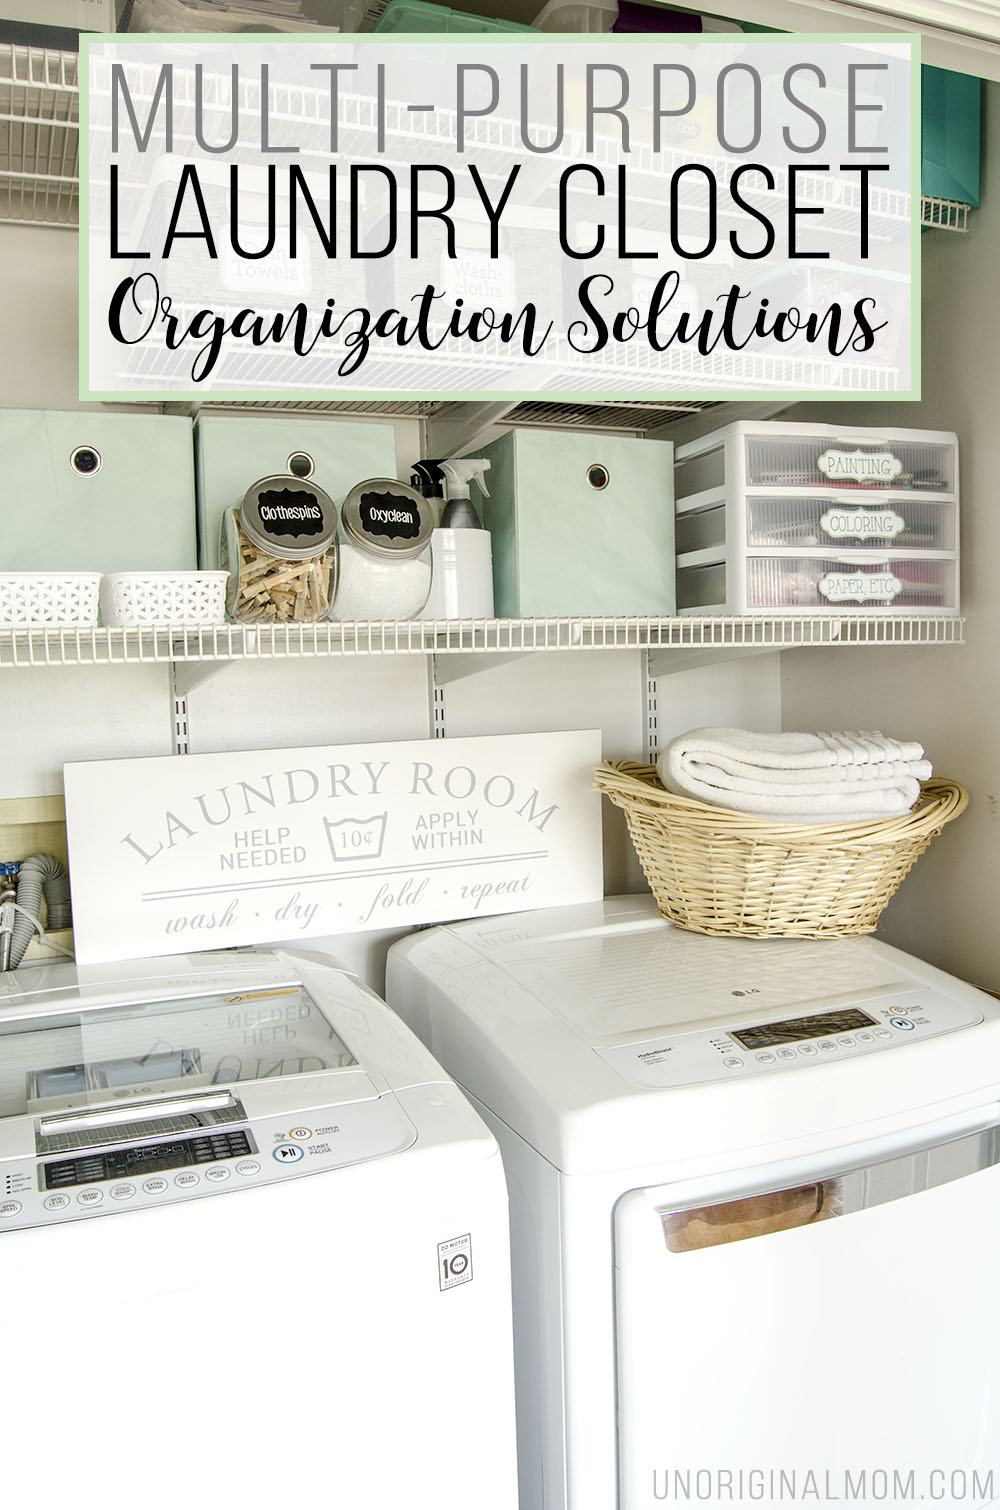 https://www.unoriginalmom.com/wp-content/uploads/2017/01/multi-purpose-laundry-closet-organization-solutions-title.jpg